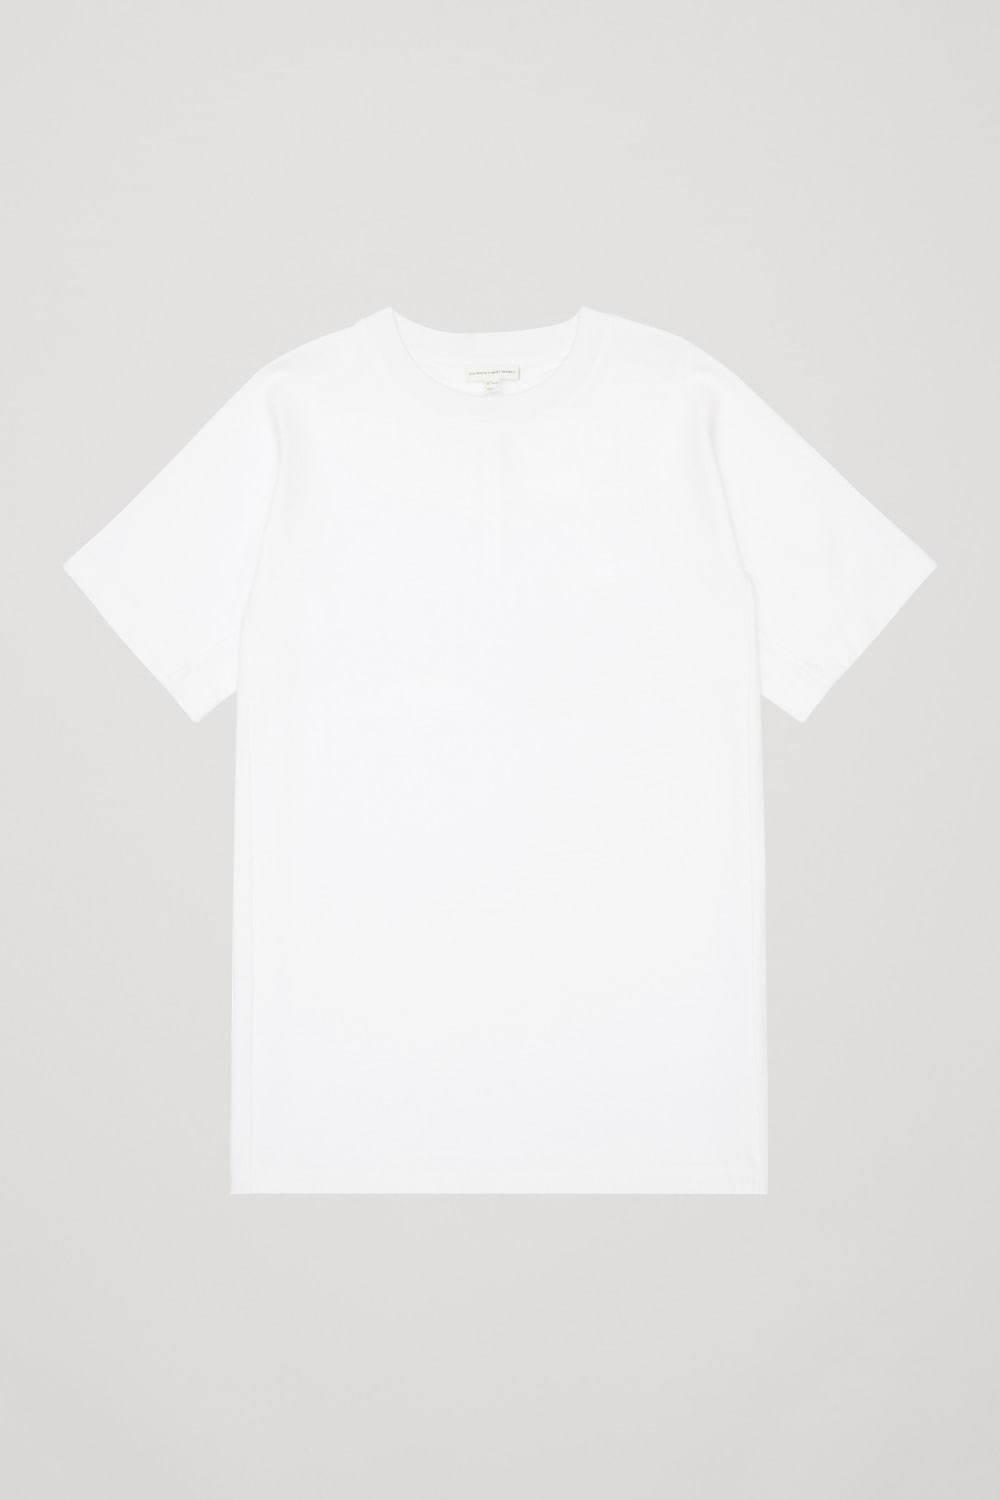 COS“白T”に特化したコレクション「ホワイト Tシャツ プロジェクト」メンズ＆ウィメンズ全7型 コピー